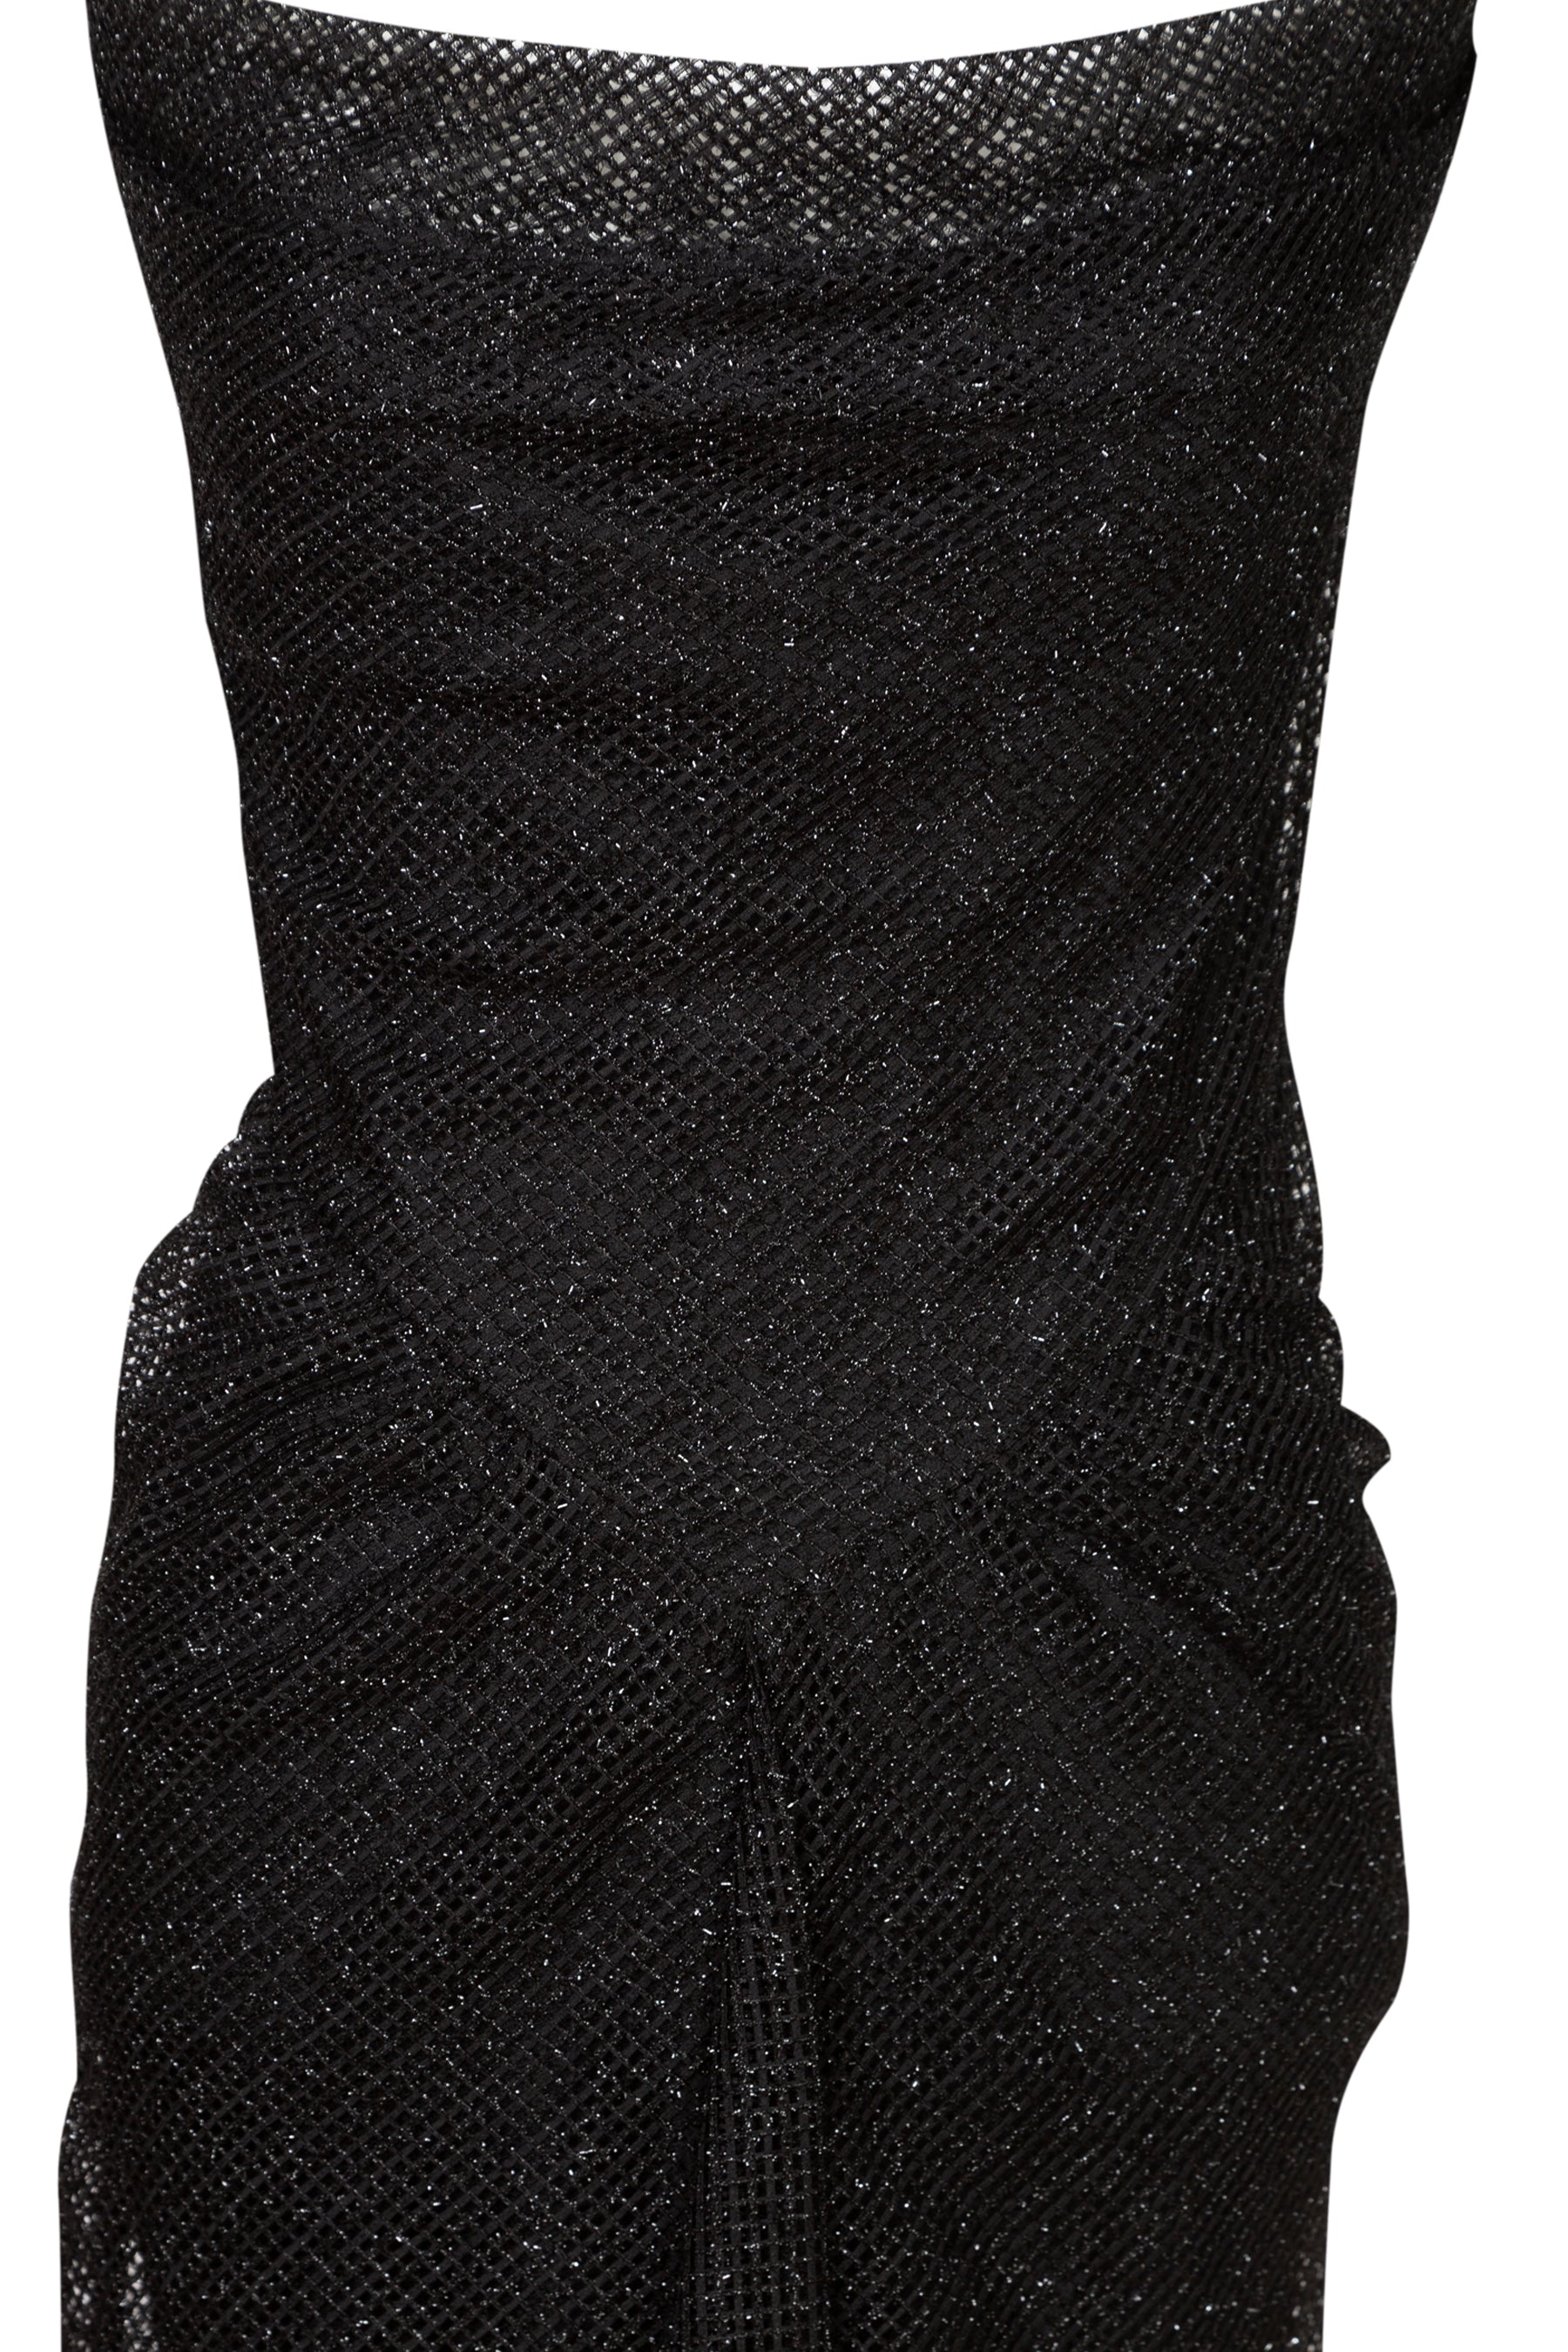 Harbison Diamond Slip Dress in Black | SS '22 Runway (est. retail $695 ...